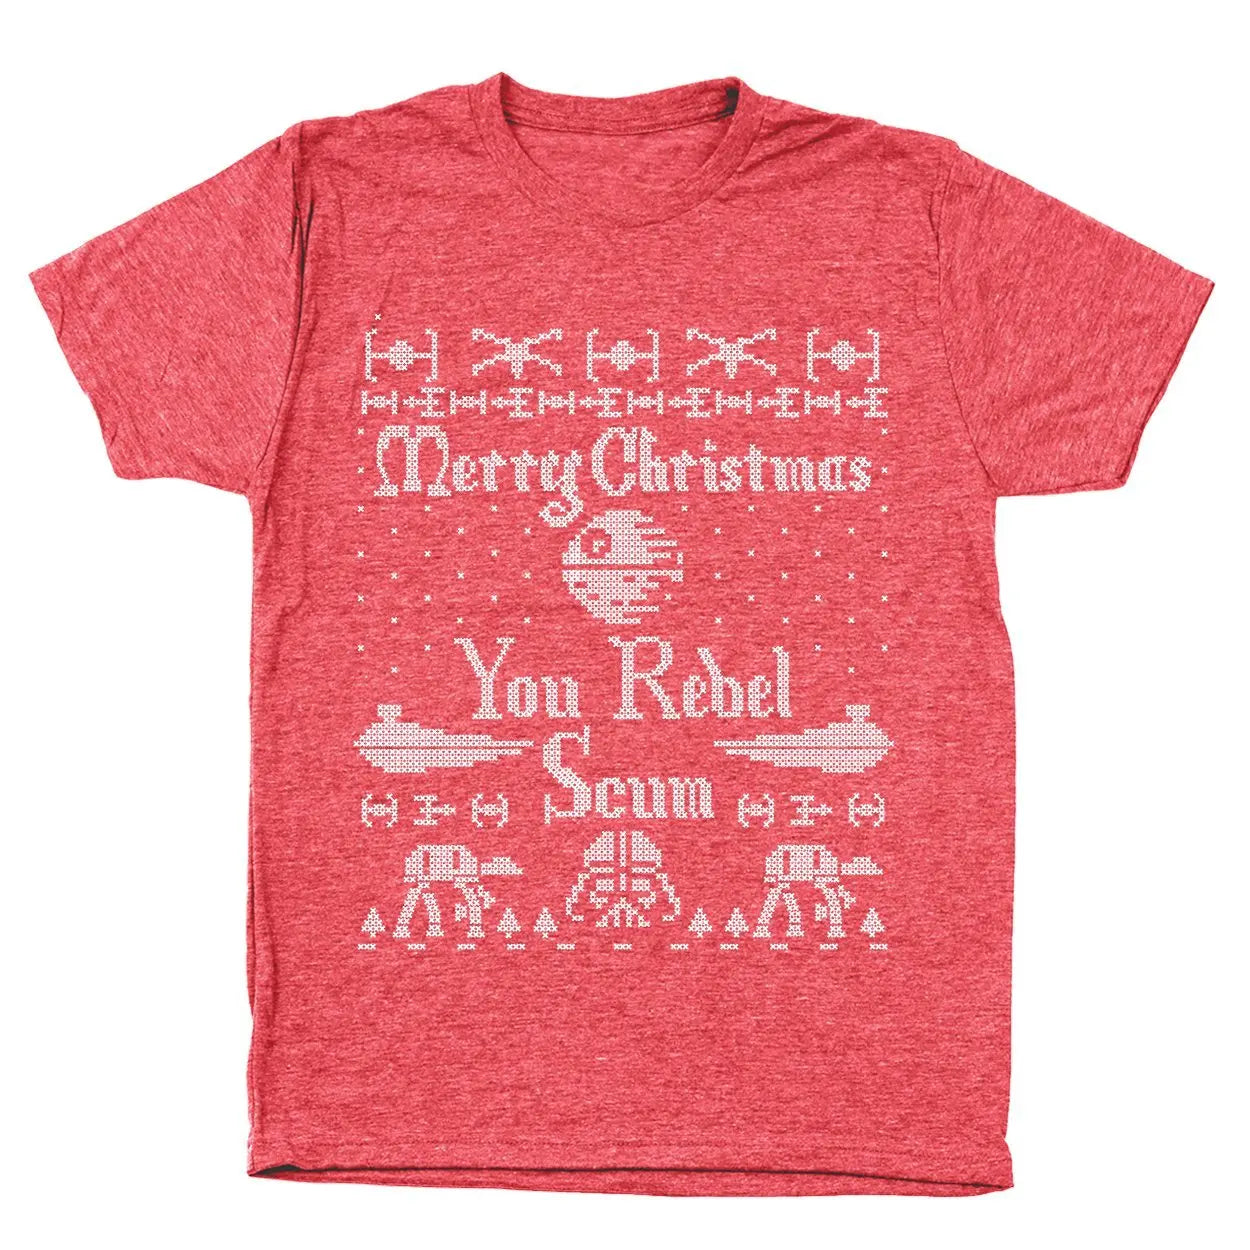 Merry Christmas You Rebel Scum Tshirt - Donkey Tees